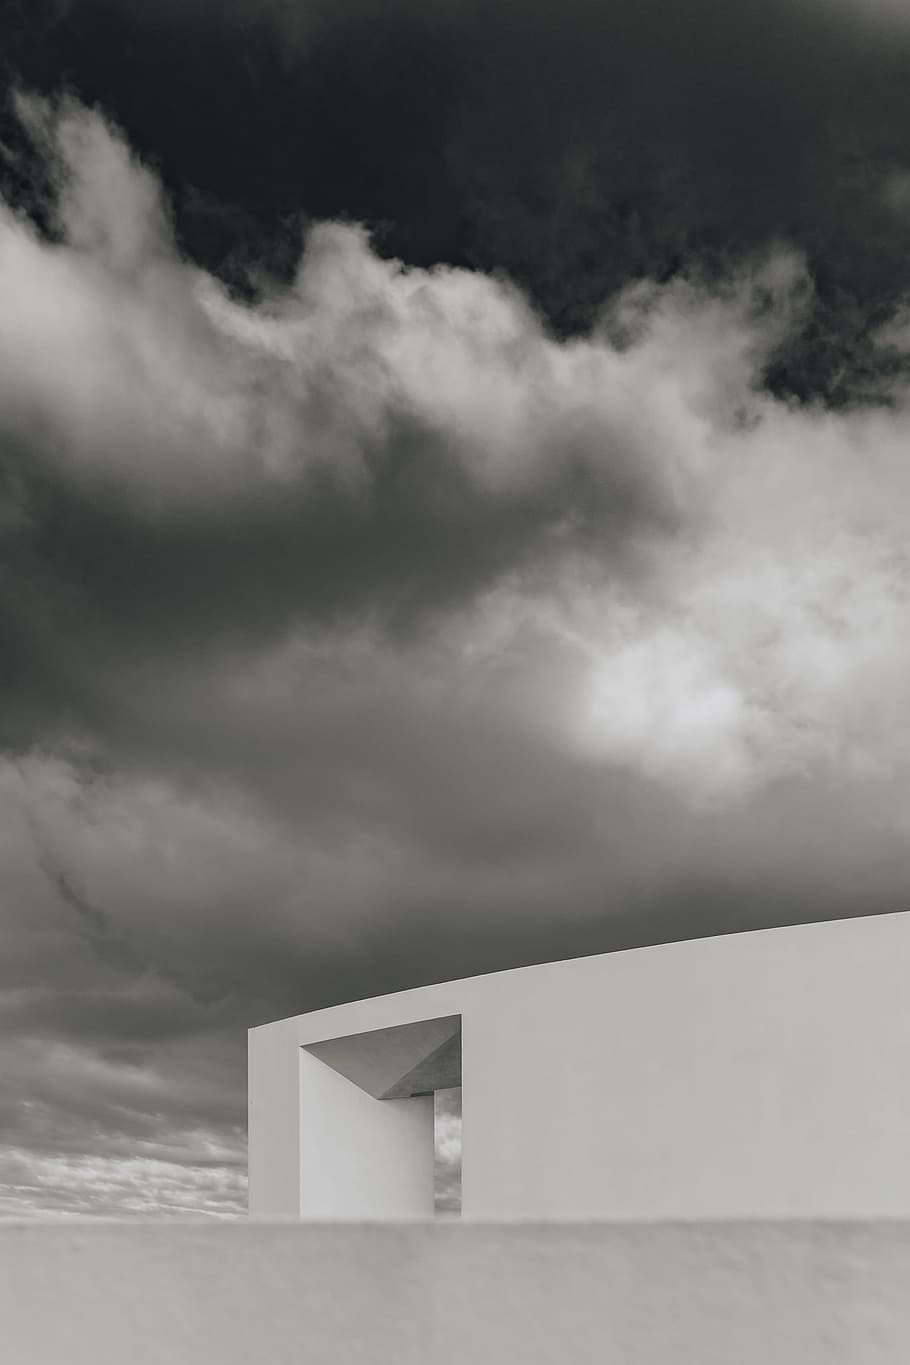 contemporary portuguese houses, architecture, design, facade, house, portugal, algarve, cloud - sky, sky, built structure